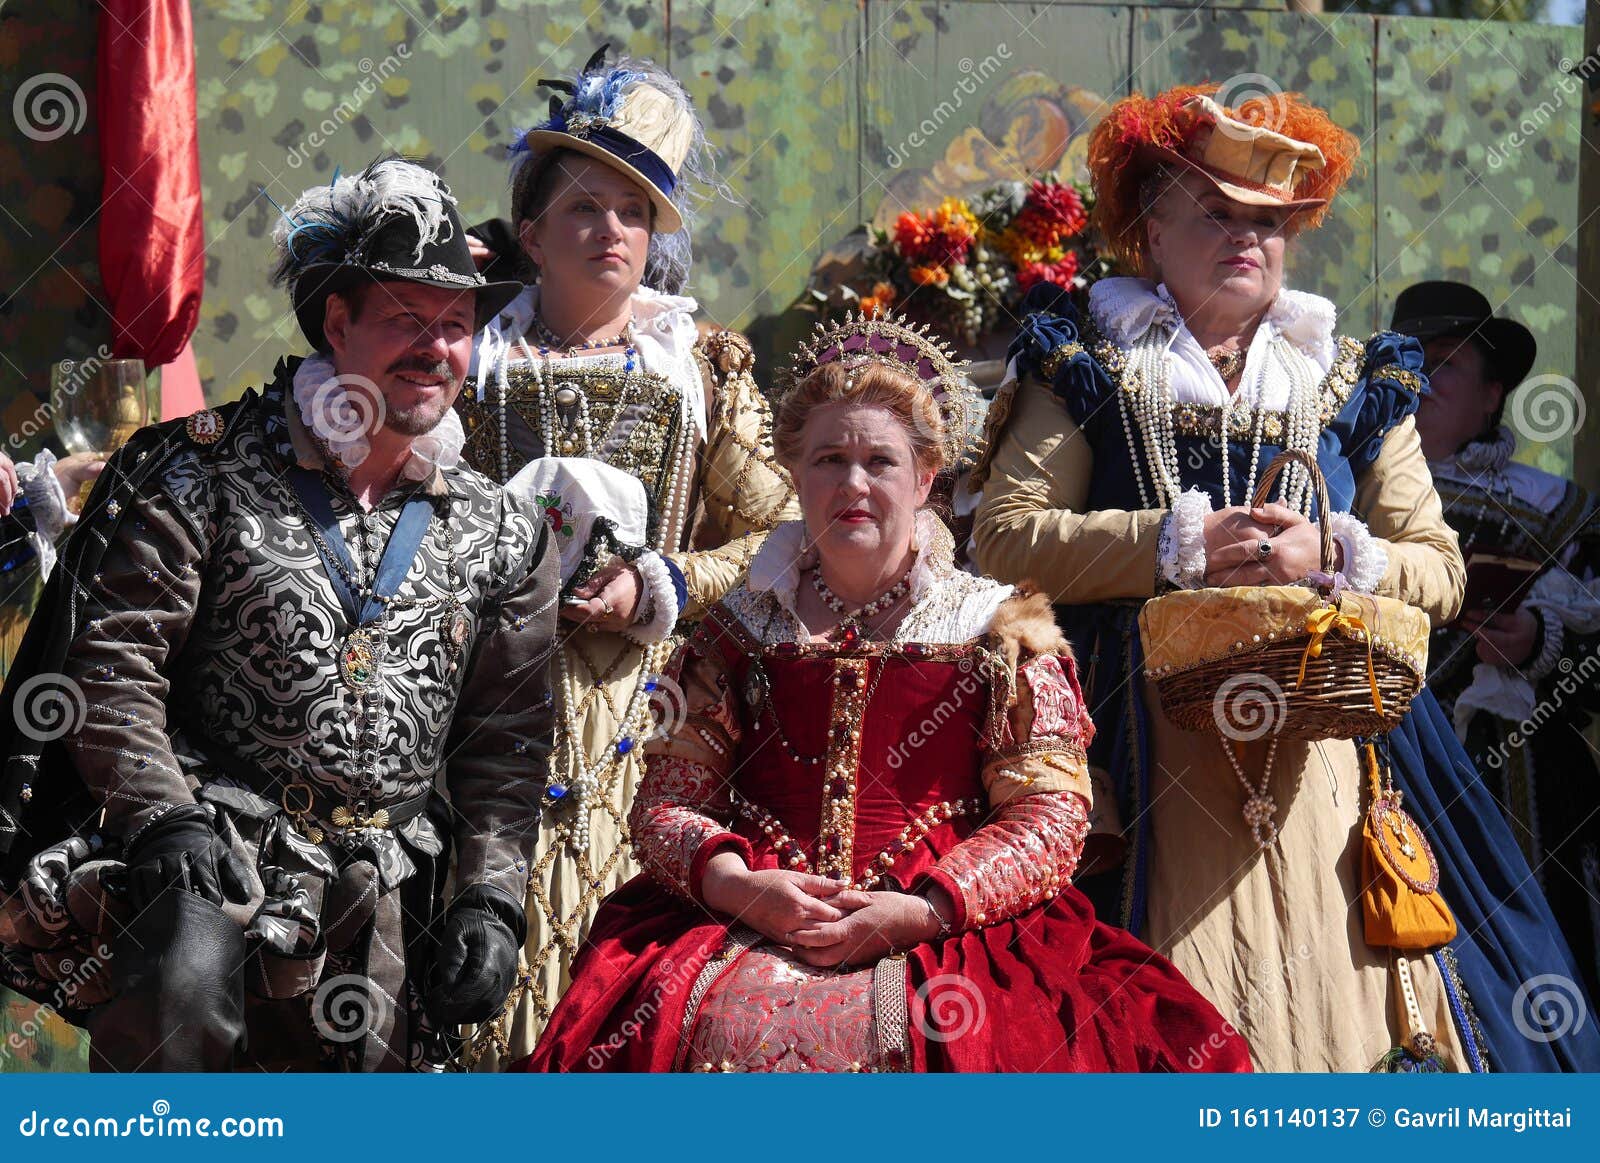 Renaissance Fair, the Queen and Her Entourage Editorial Photography ...